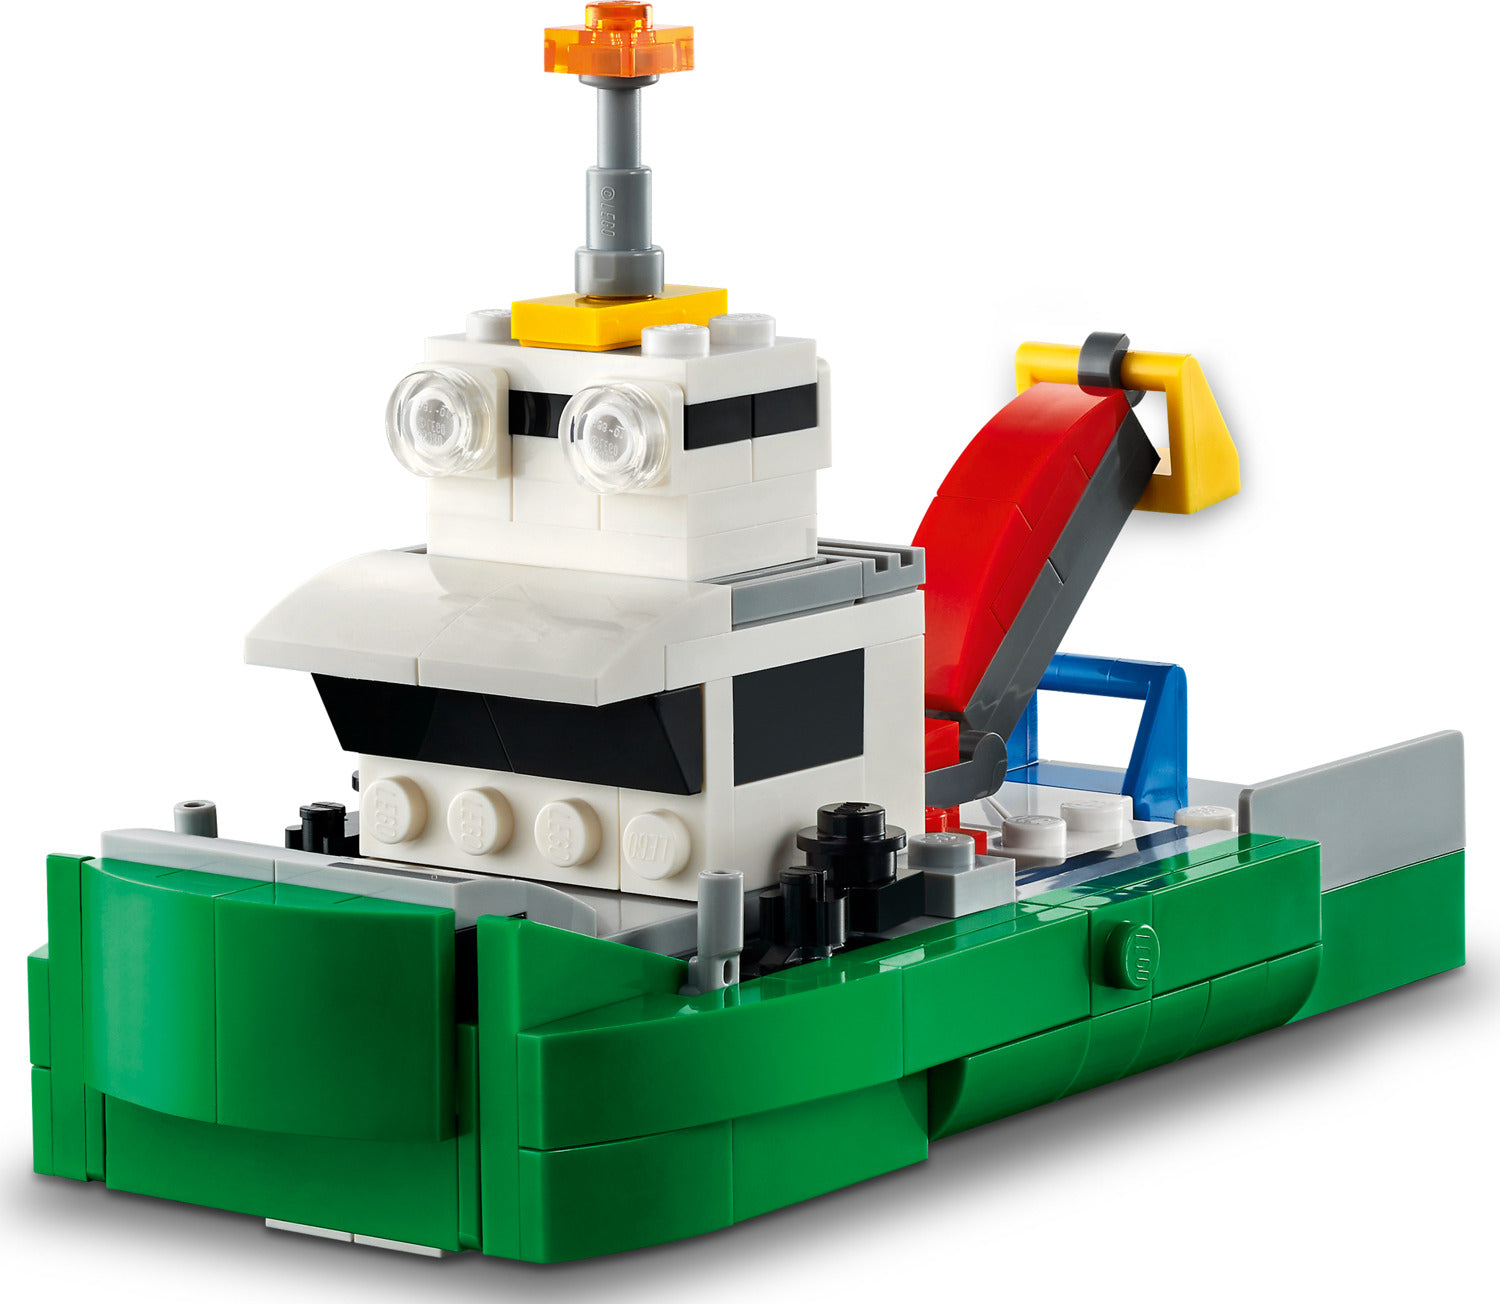 LEGO® Creator 3-in-1: Race Car Transporter